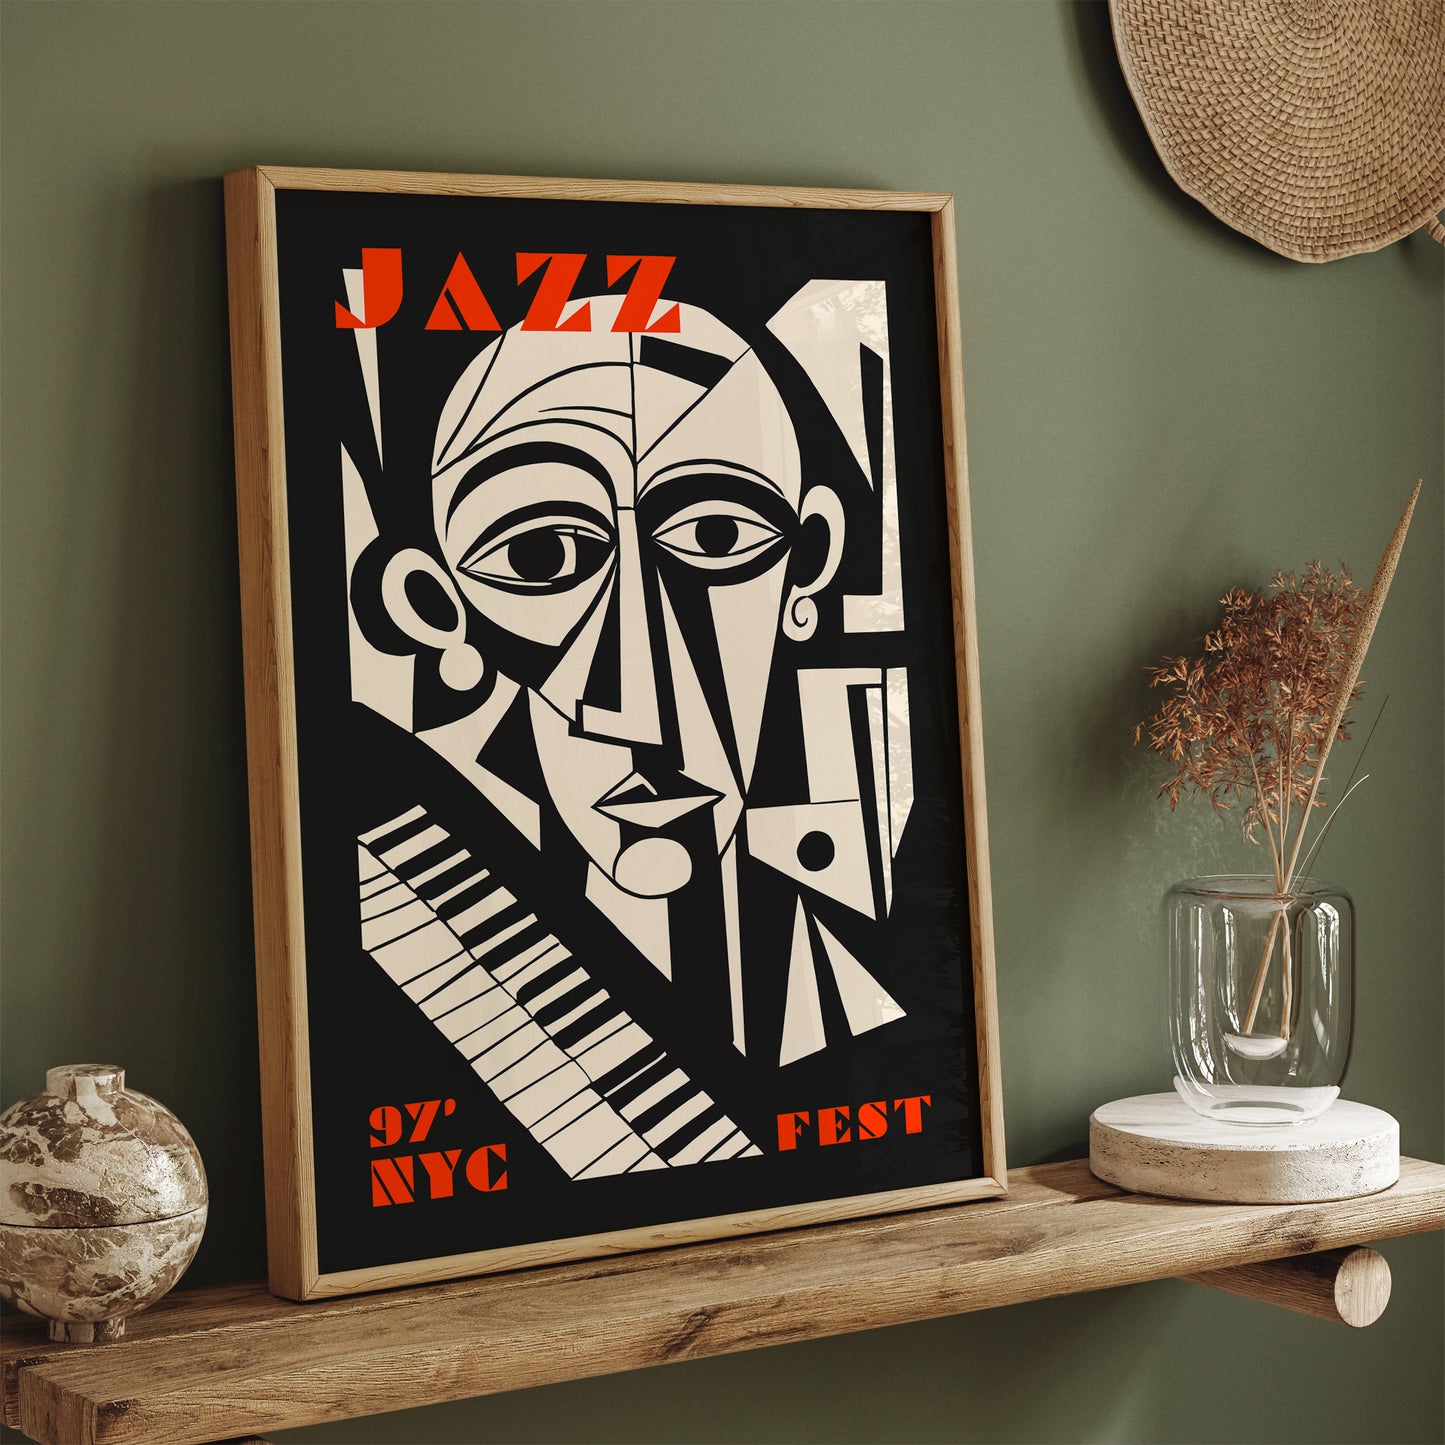 NYC Jazz Fest Cubism Black Poster